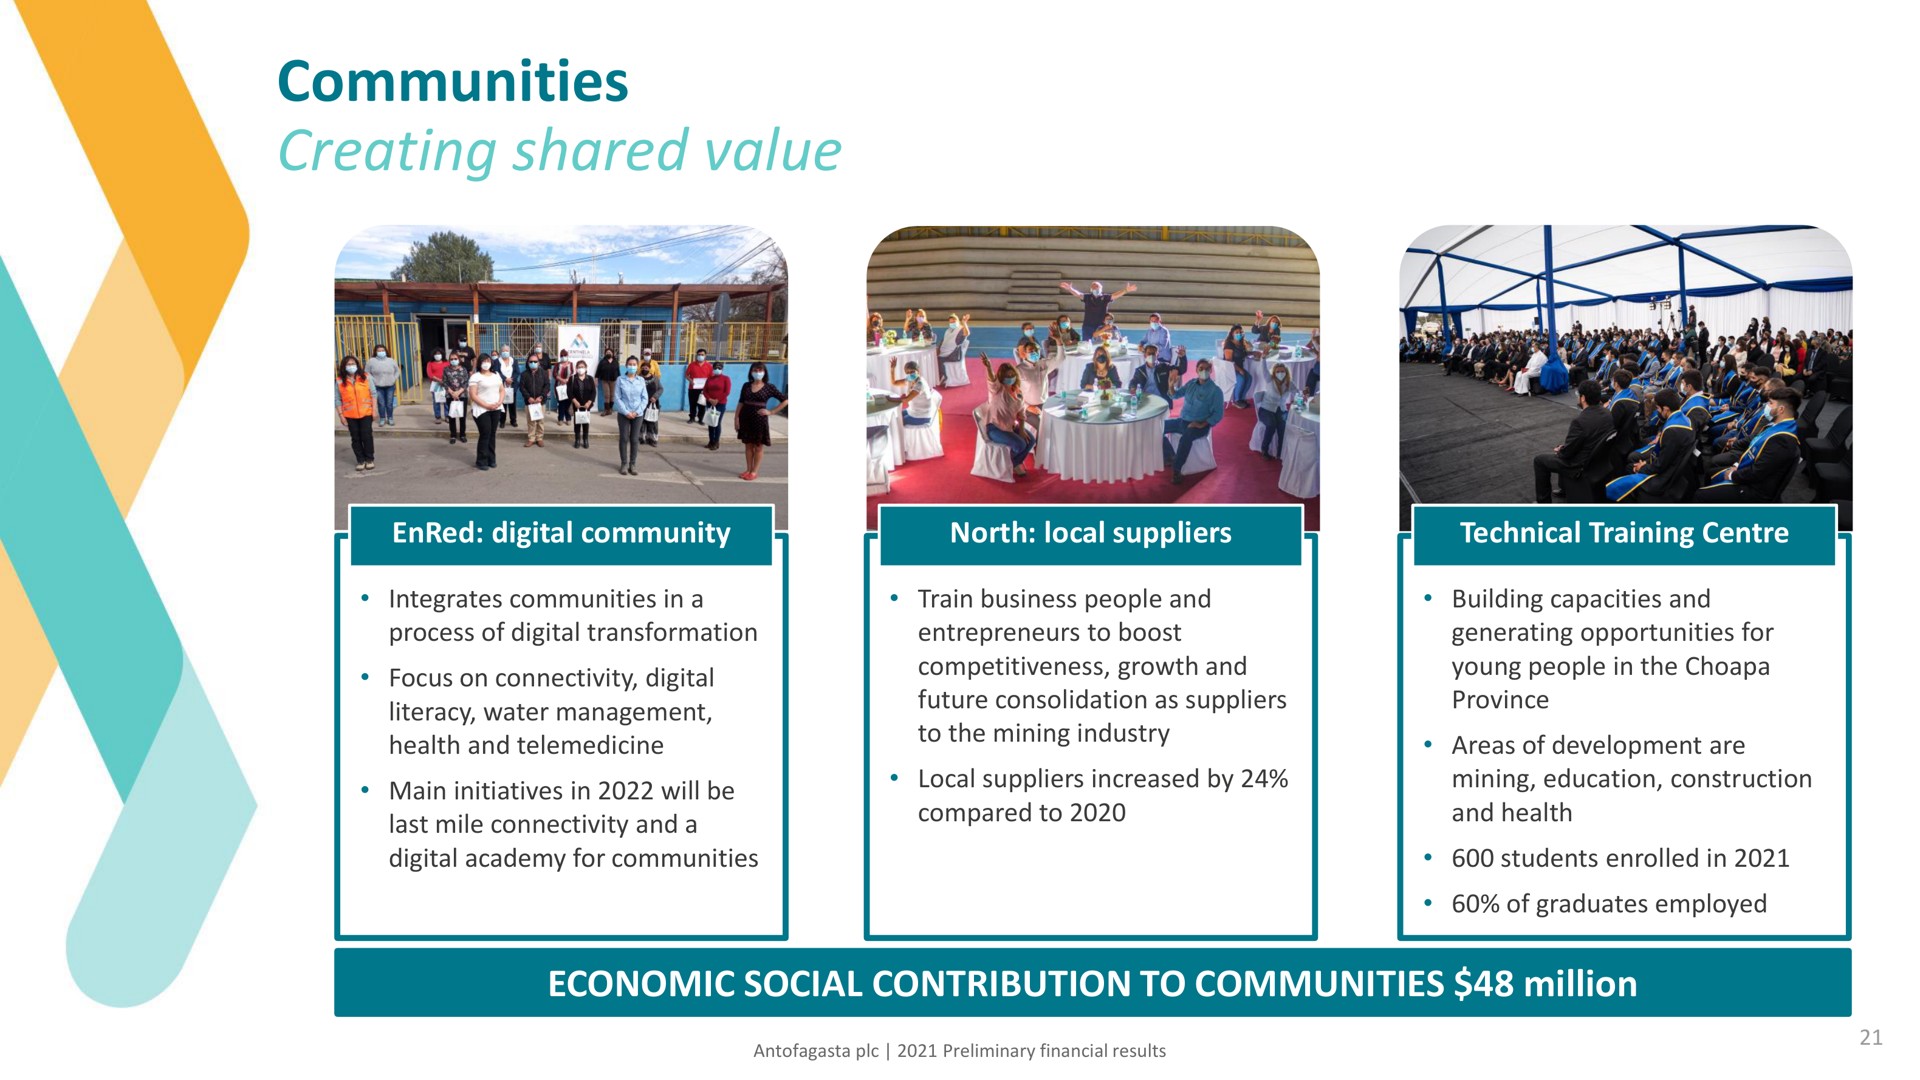 communities creating shared value | Antofagasta